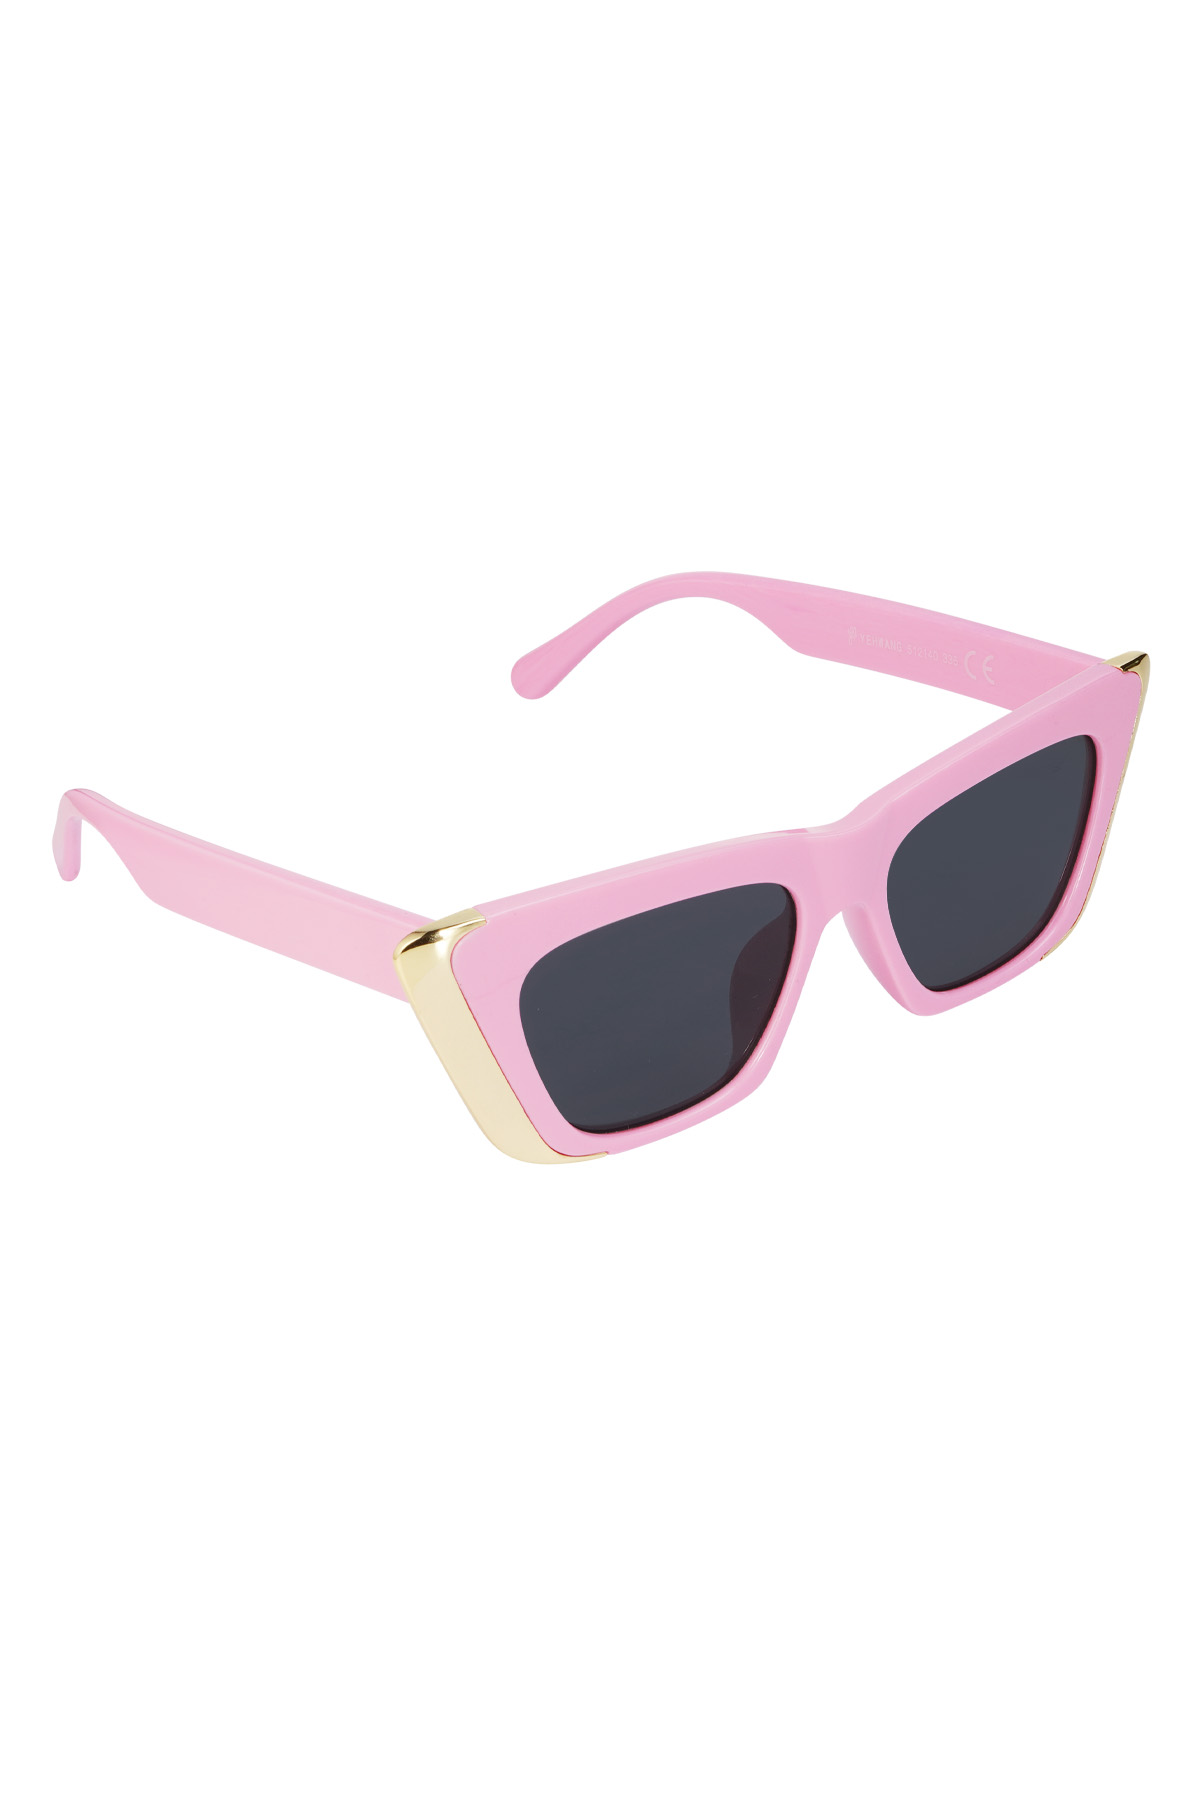 Gafas de sol sun savvy - oro rosa